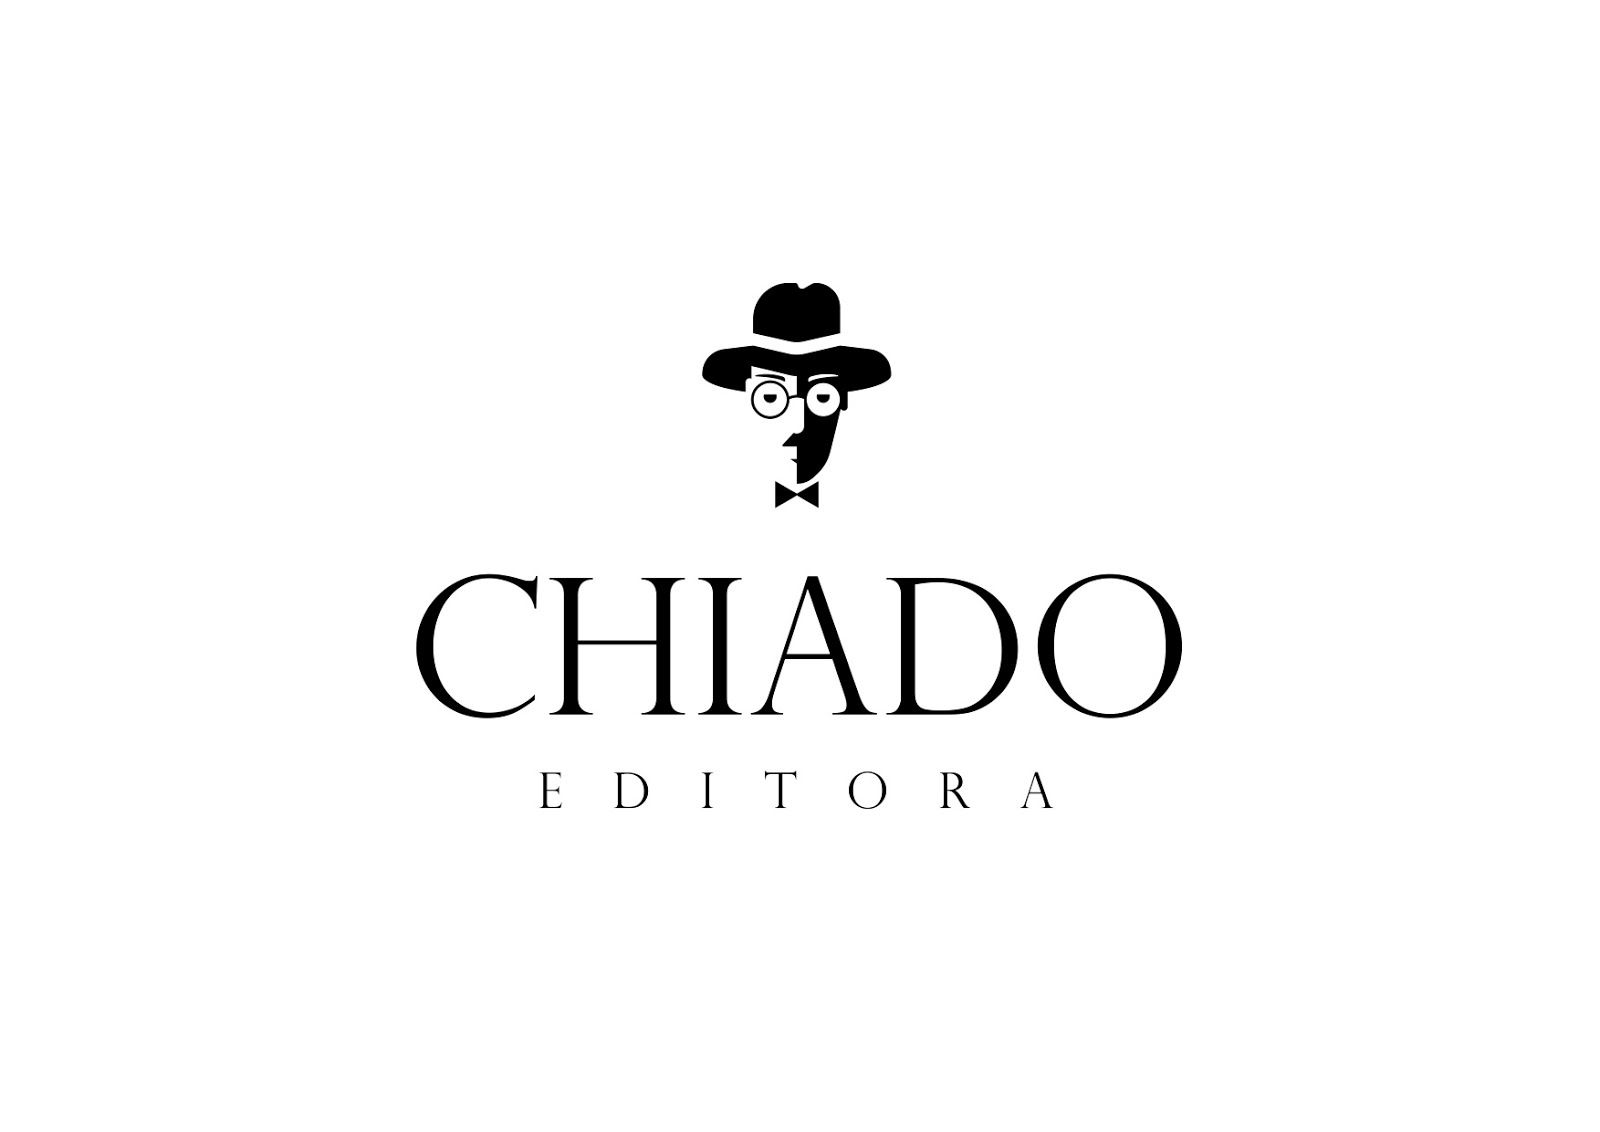 EDITORA CHIADO